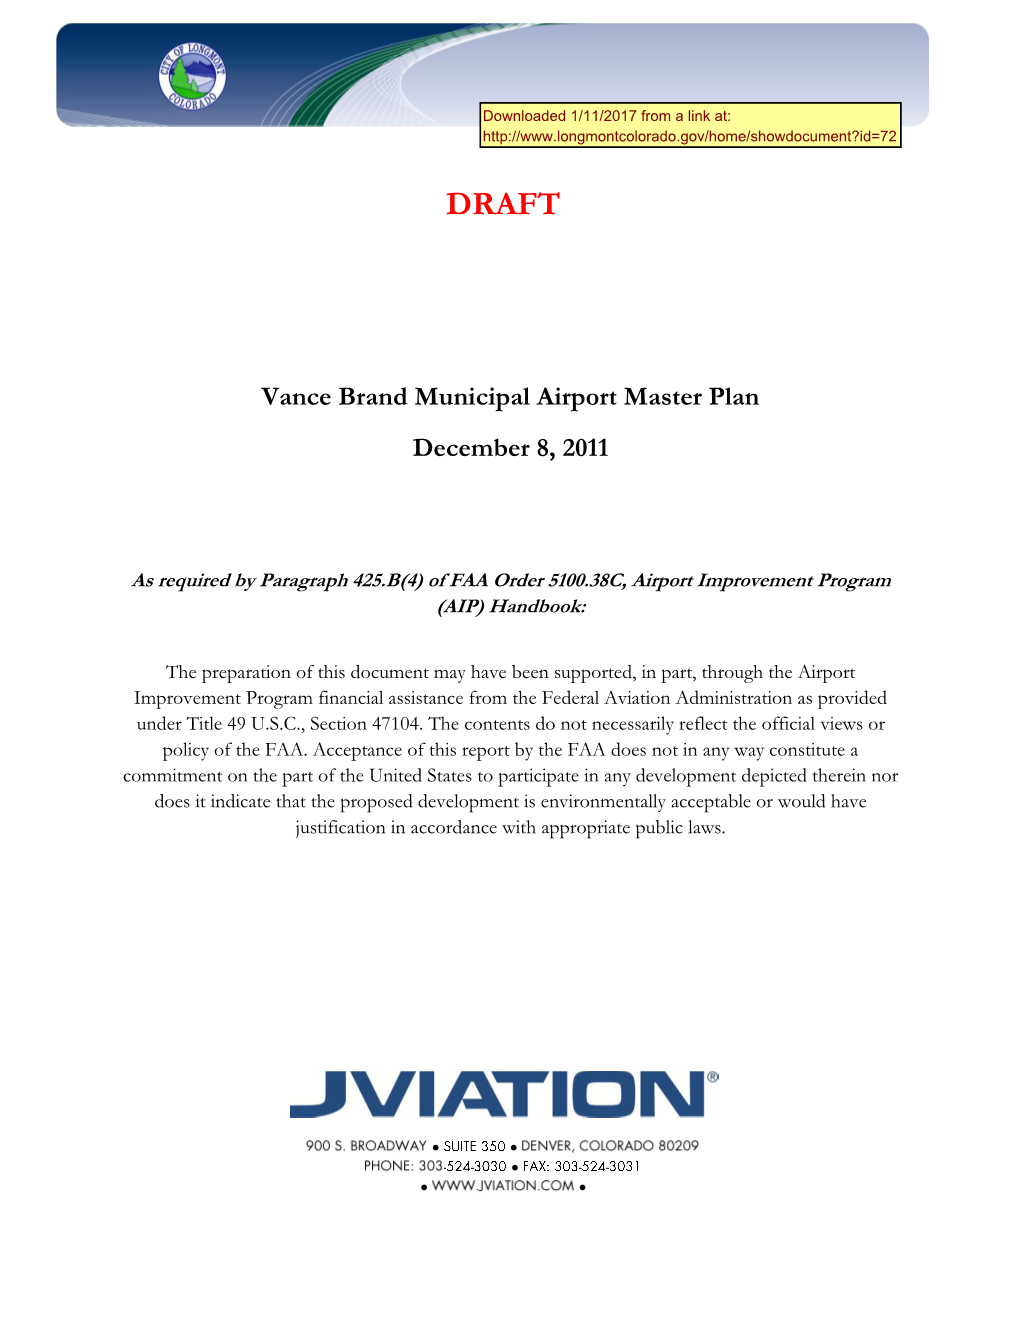 Vance Brand Municipal Airport Master Plan December 8, 2011